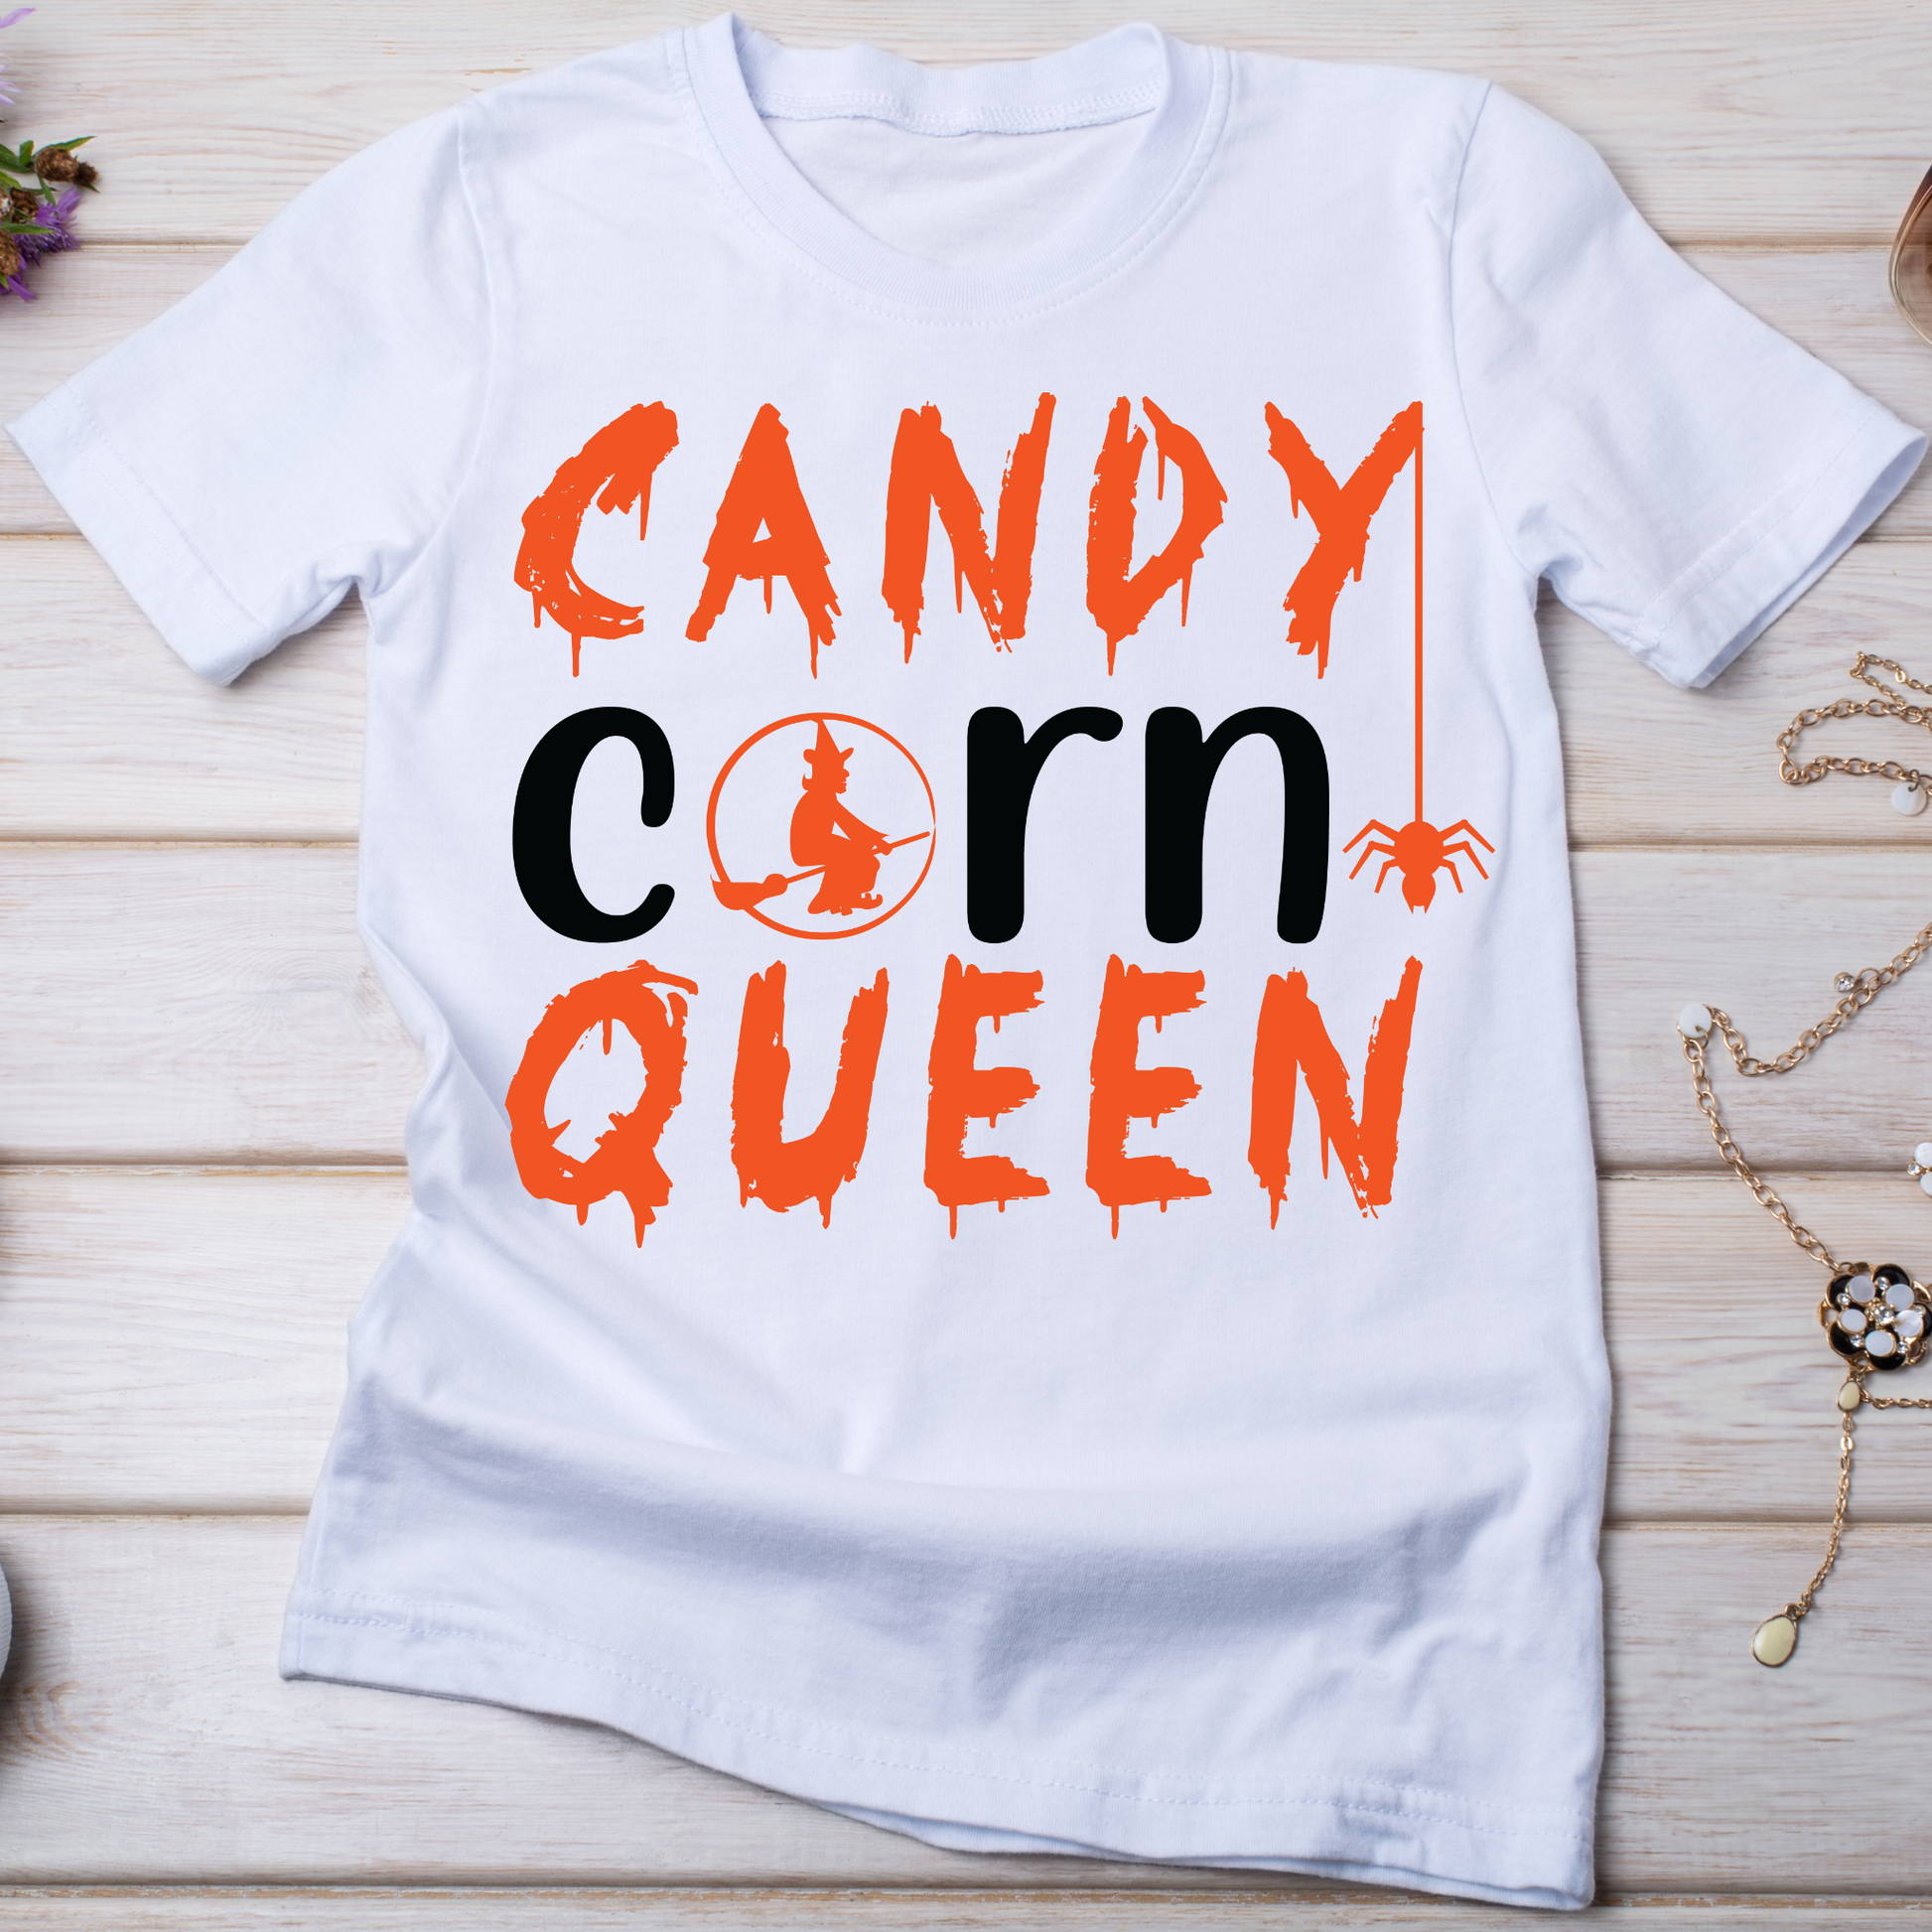 Candy corn queen Women's Halloween t-shirt - Premium t-shirt from Lees Krazy Teez - Just $19.95! Shop now at Lees Krazy Teez